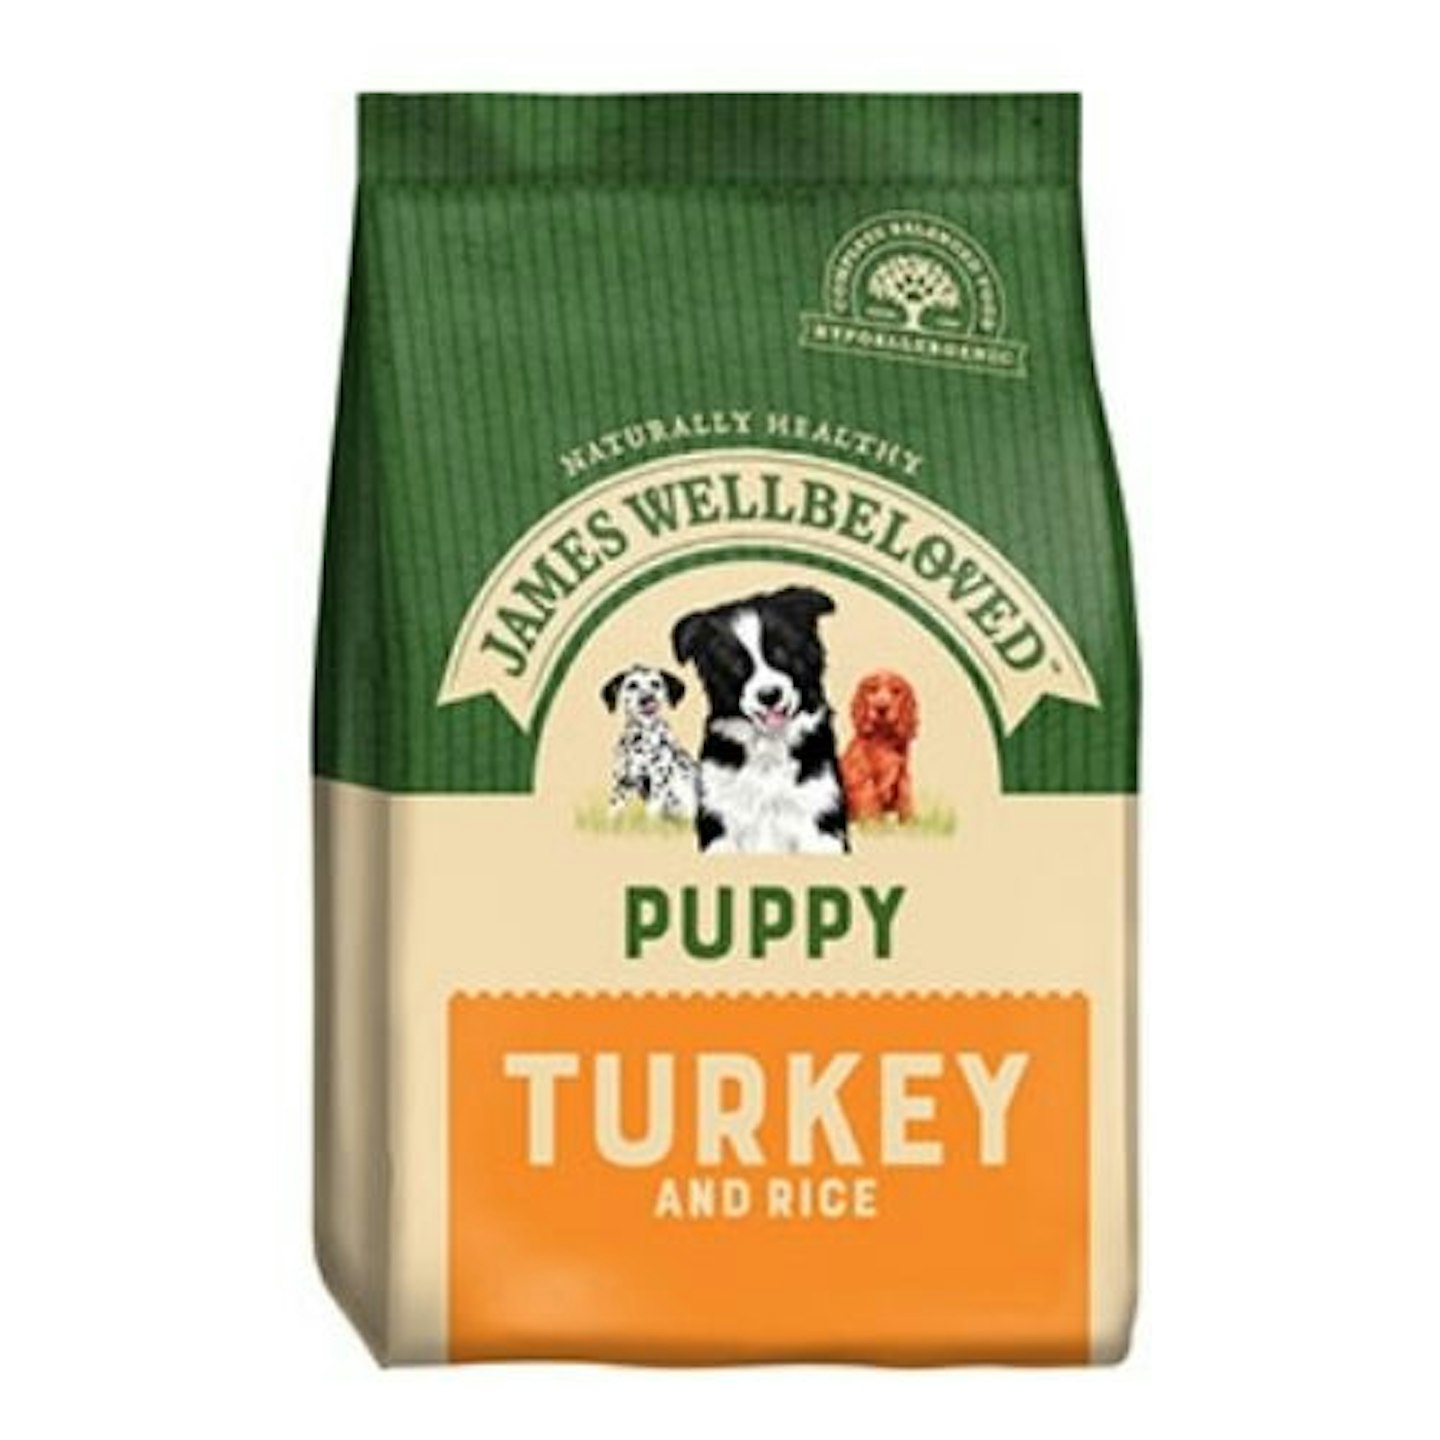 James Wellbeloved Dry Puppy Food